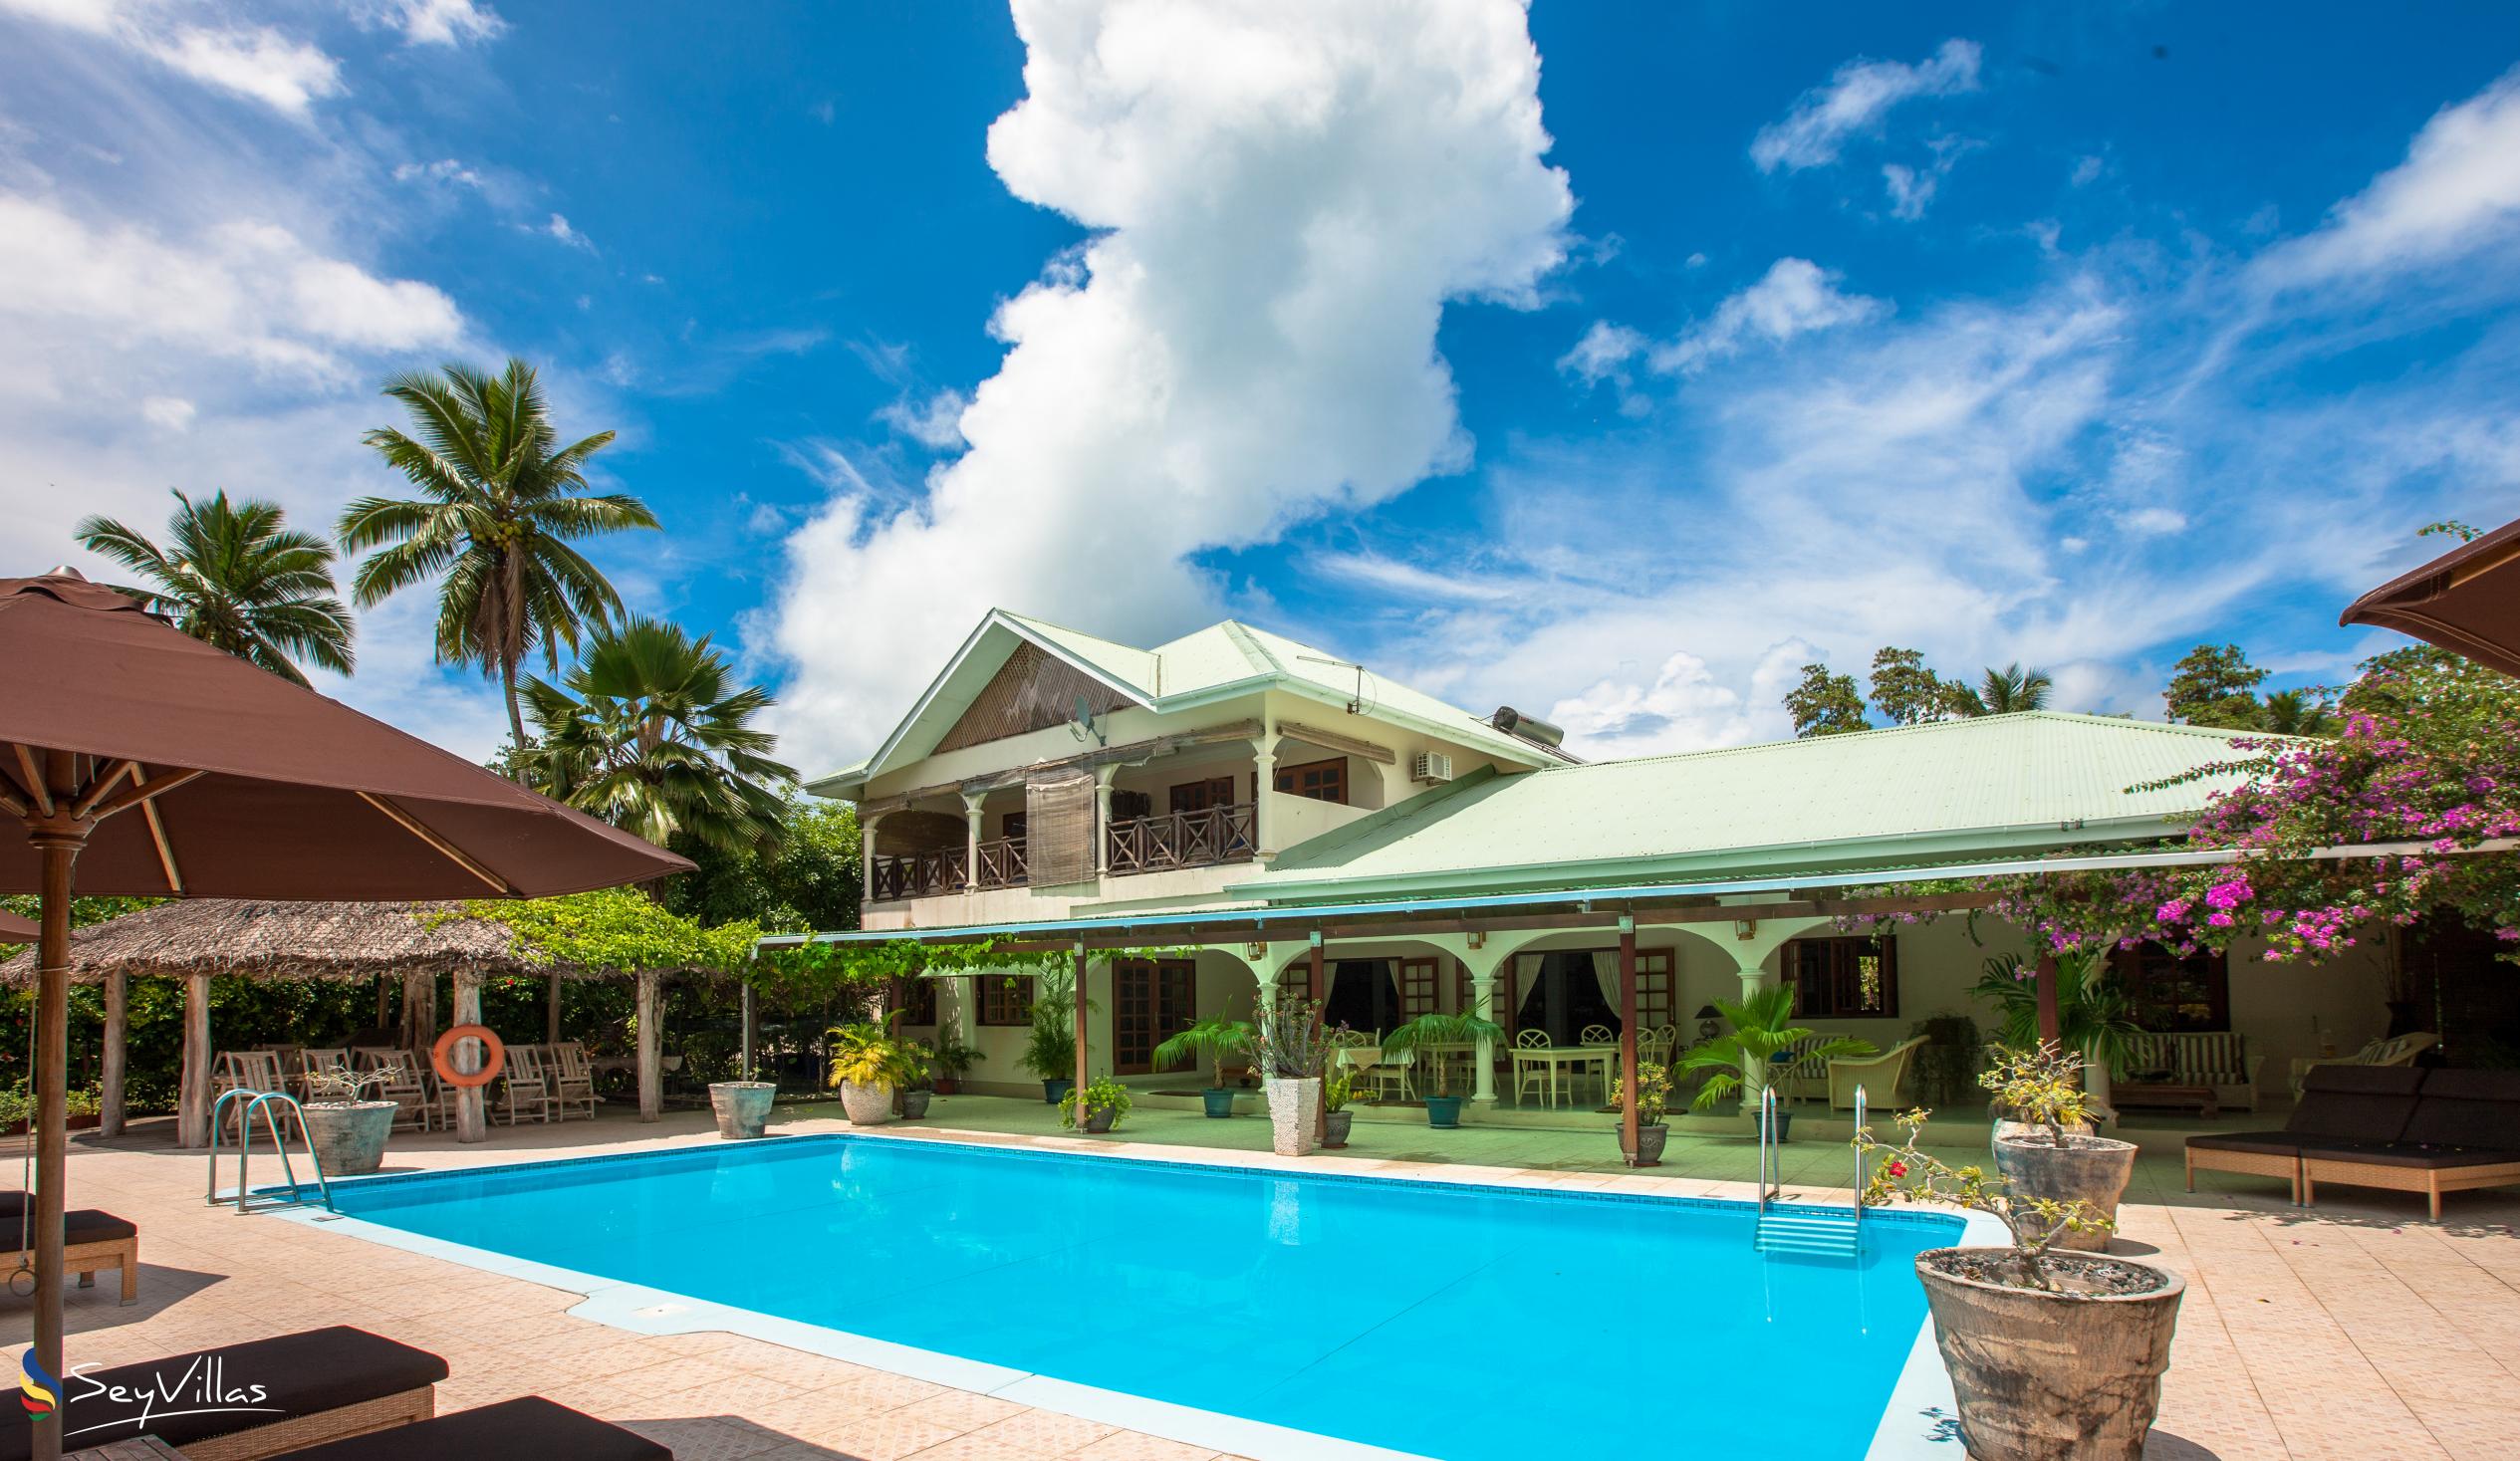 Photo 3: Villa de Cerf - Outdoor area - Cerf Island (Seychelles)